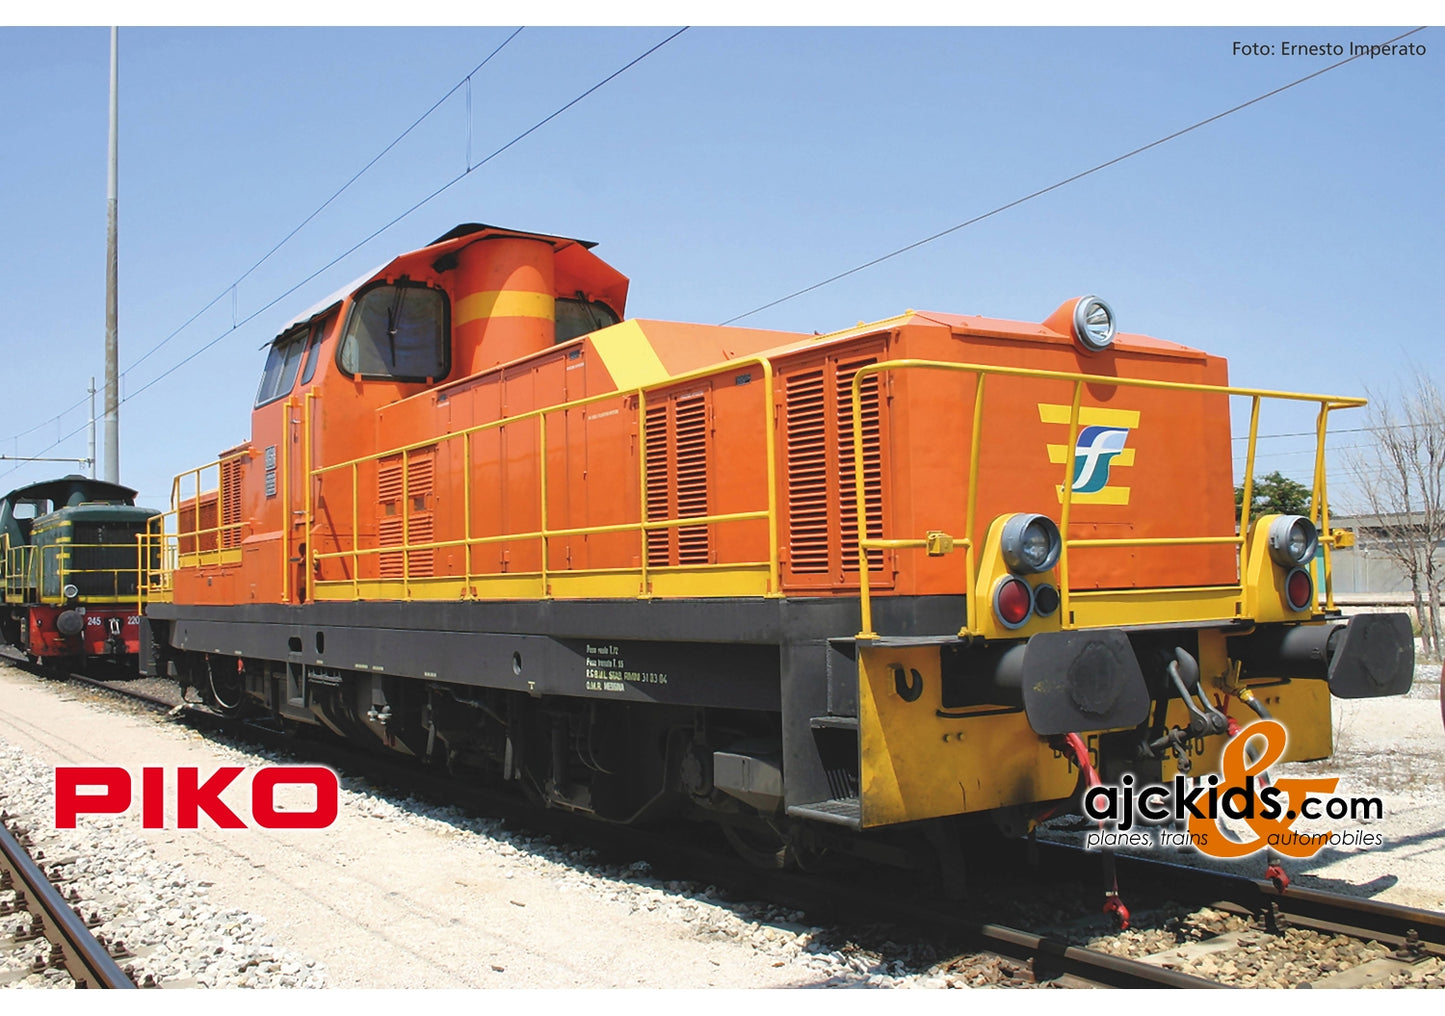 Piko 52852 - Diesel Locomotive D.145 FS VI + DSS PluX22